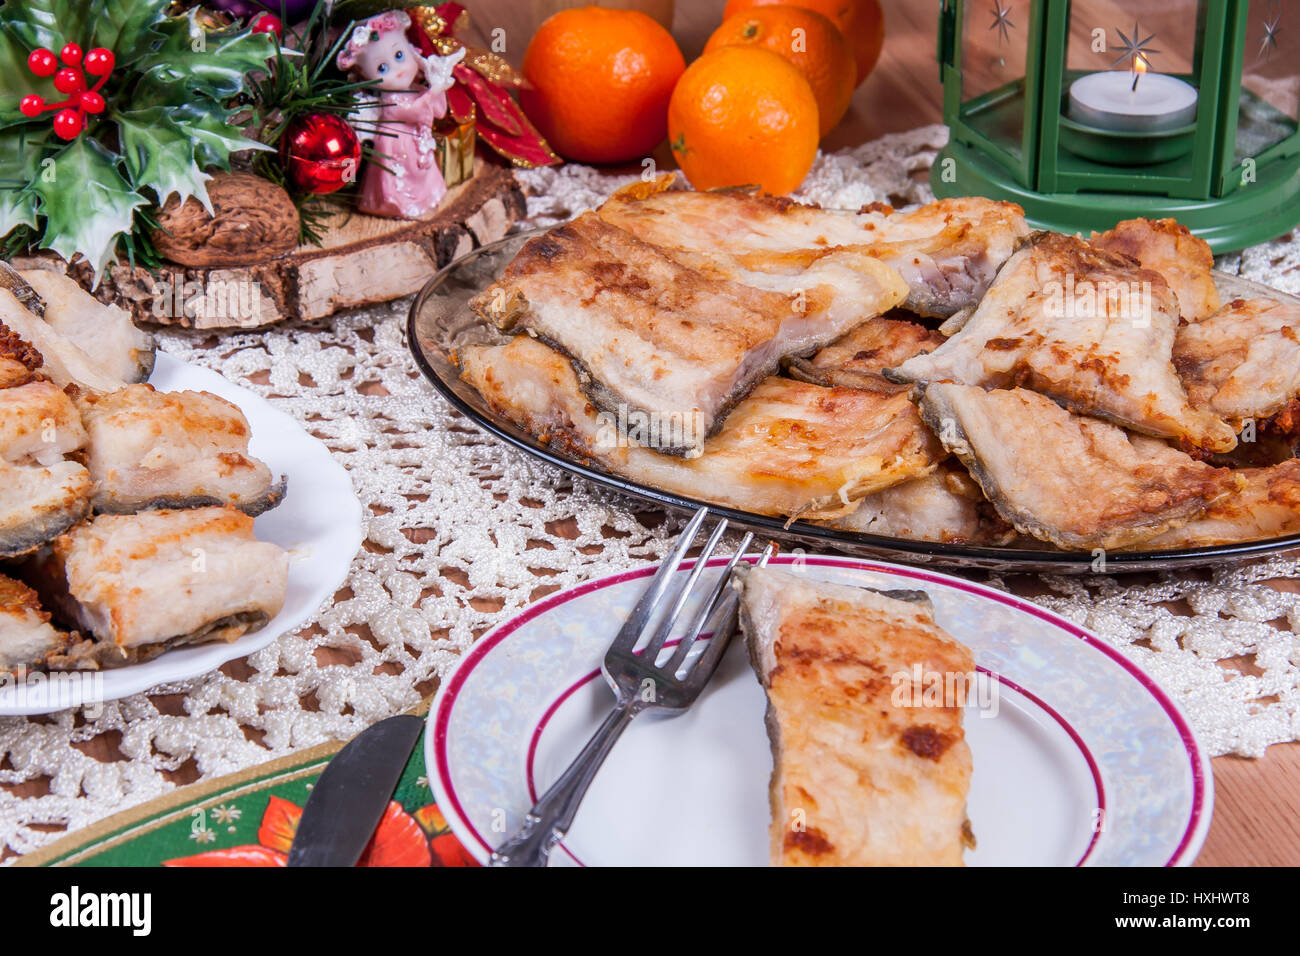 Fried Carp Traditional Polish Christmas Eve Dishes On The Table Stock Photo Alamy